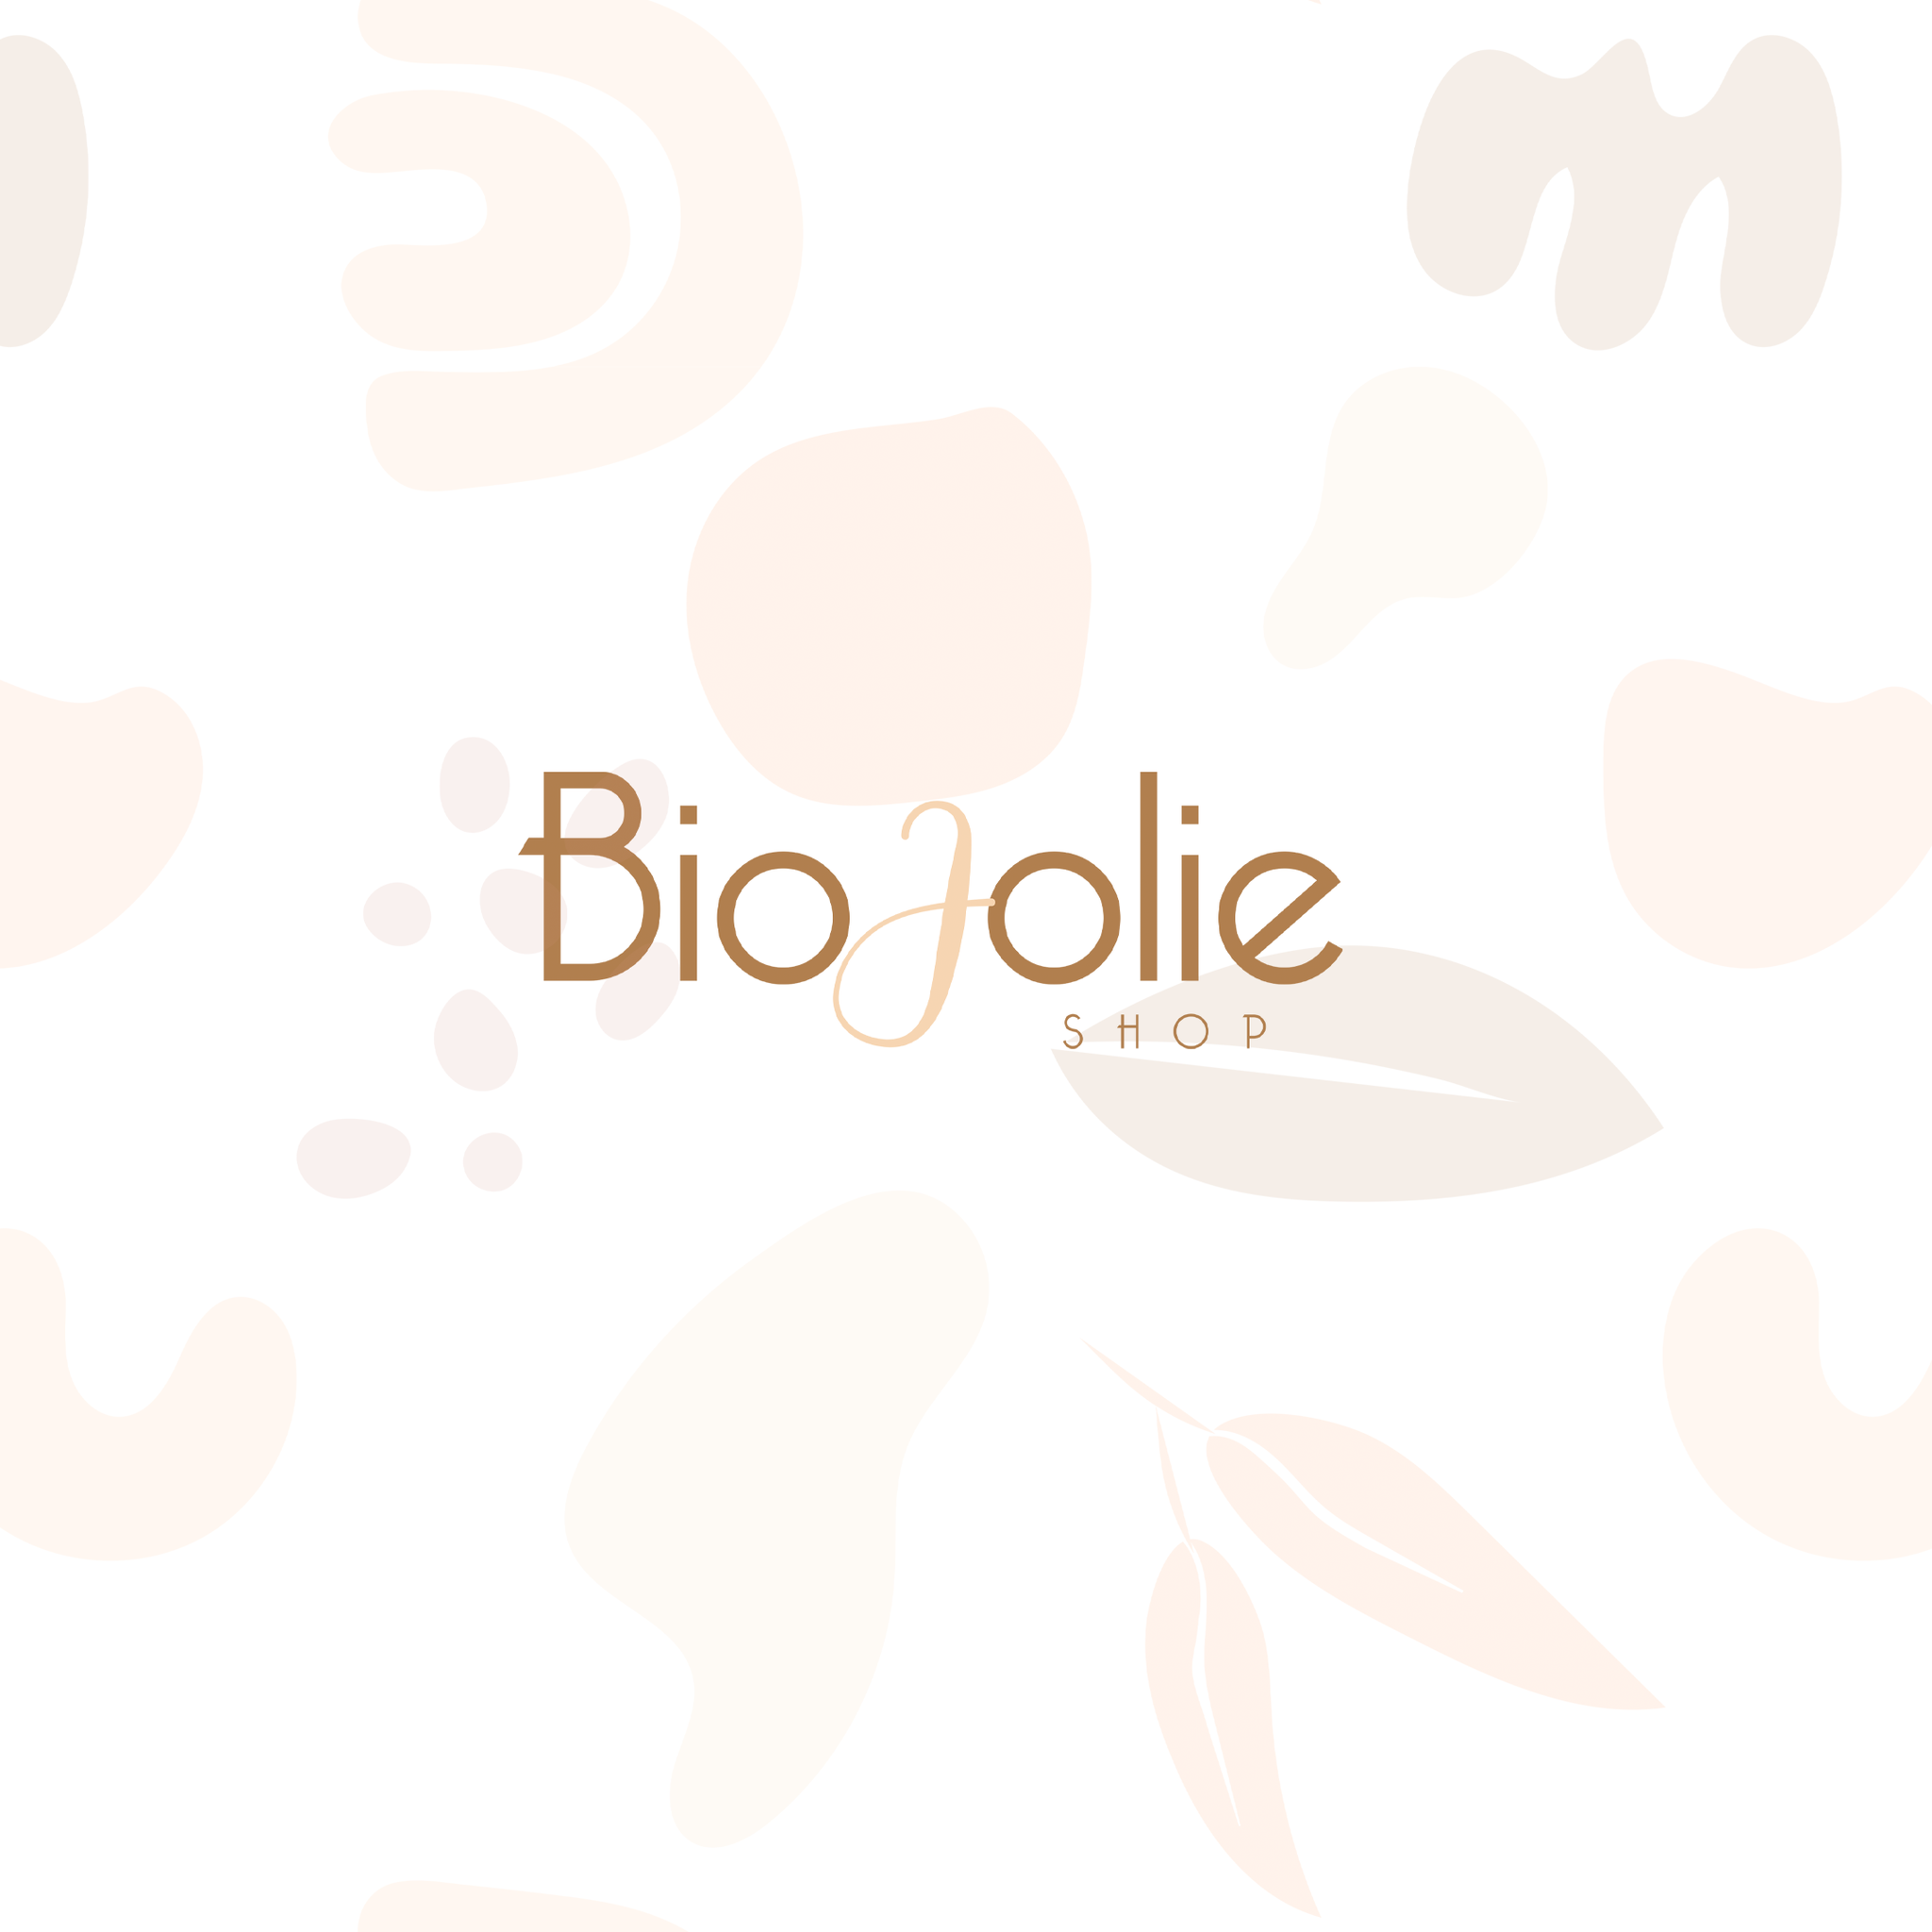 BioJolie Shop